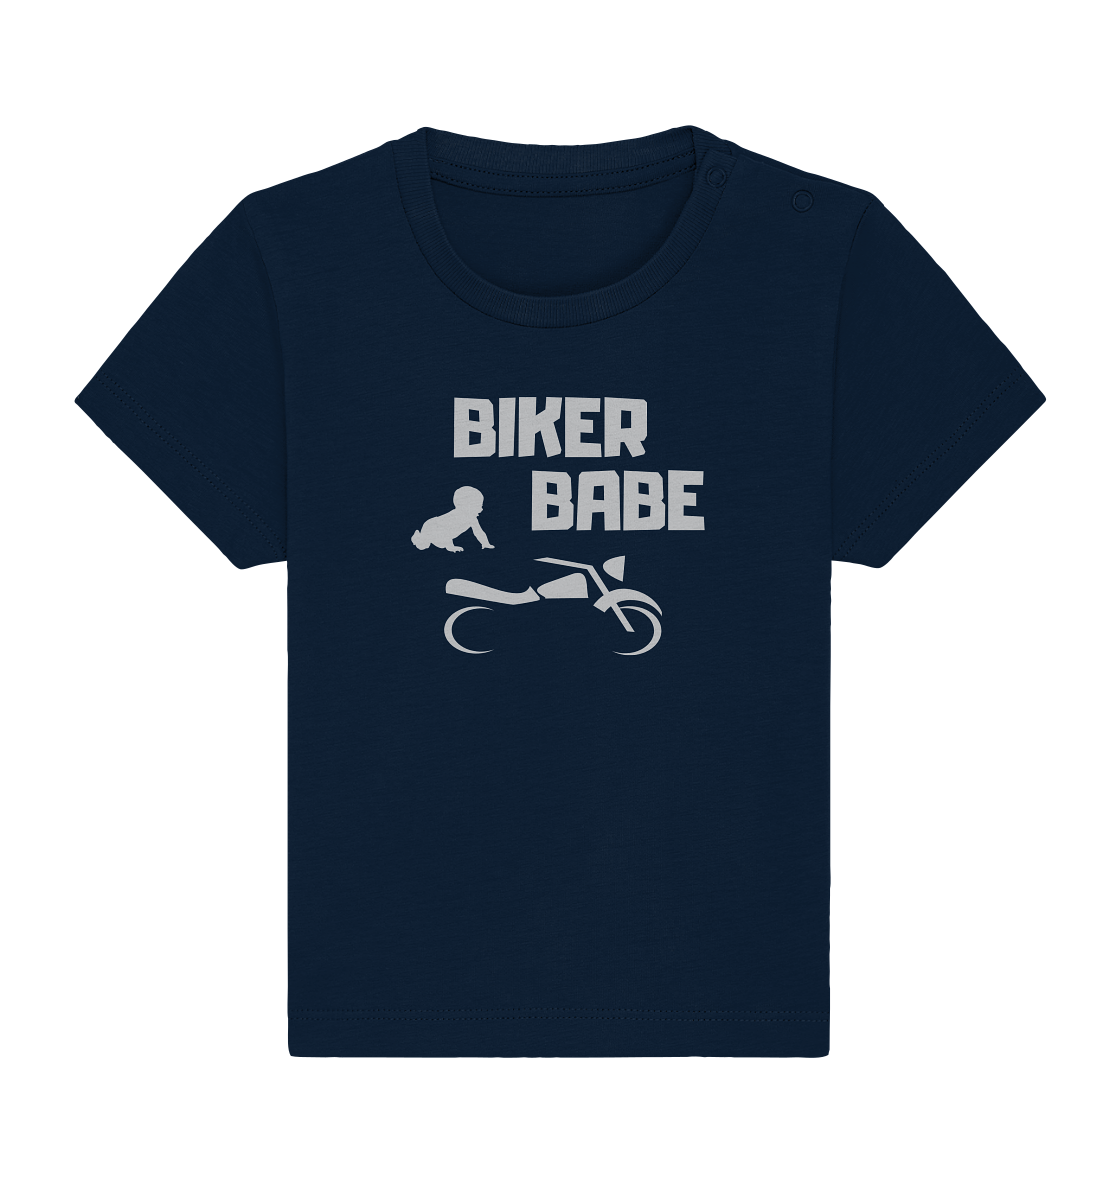 T-Shirt, Kinder, Kids, Motorrad, motorcycle, motorbike, Baby-Shirt, bedruckt, print "Biker Babe", Junge, boy, blau, blue